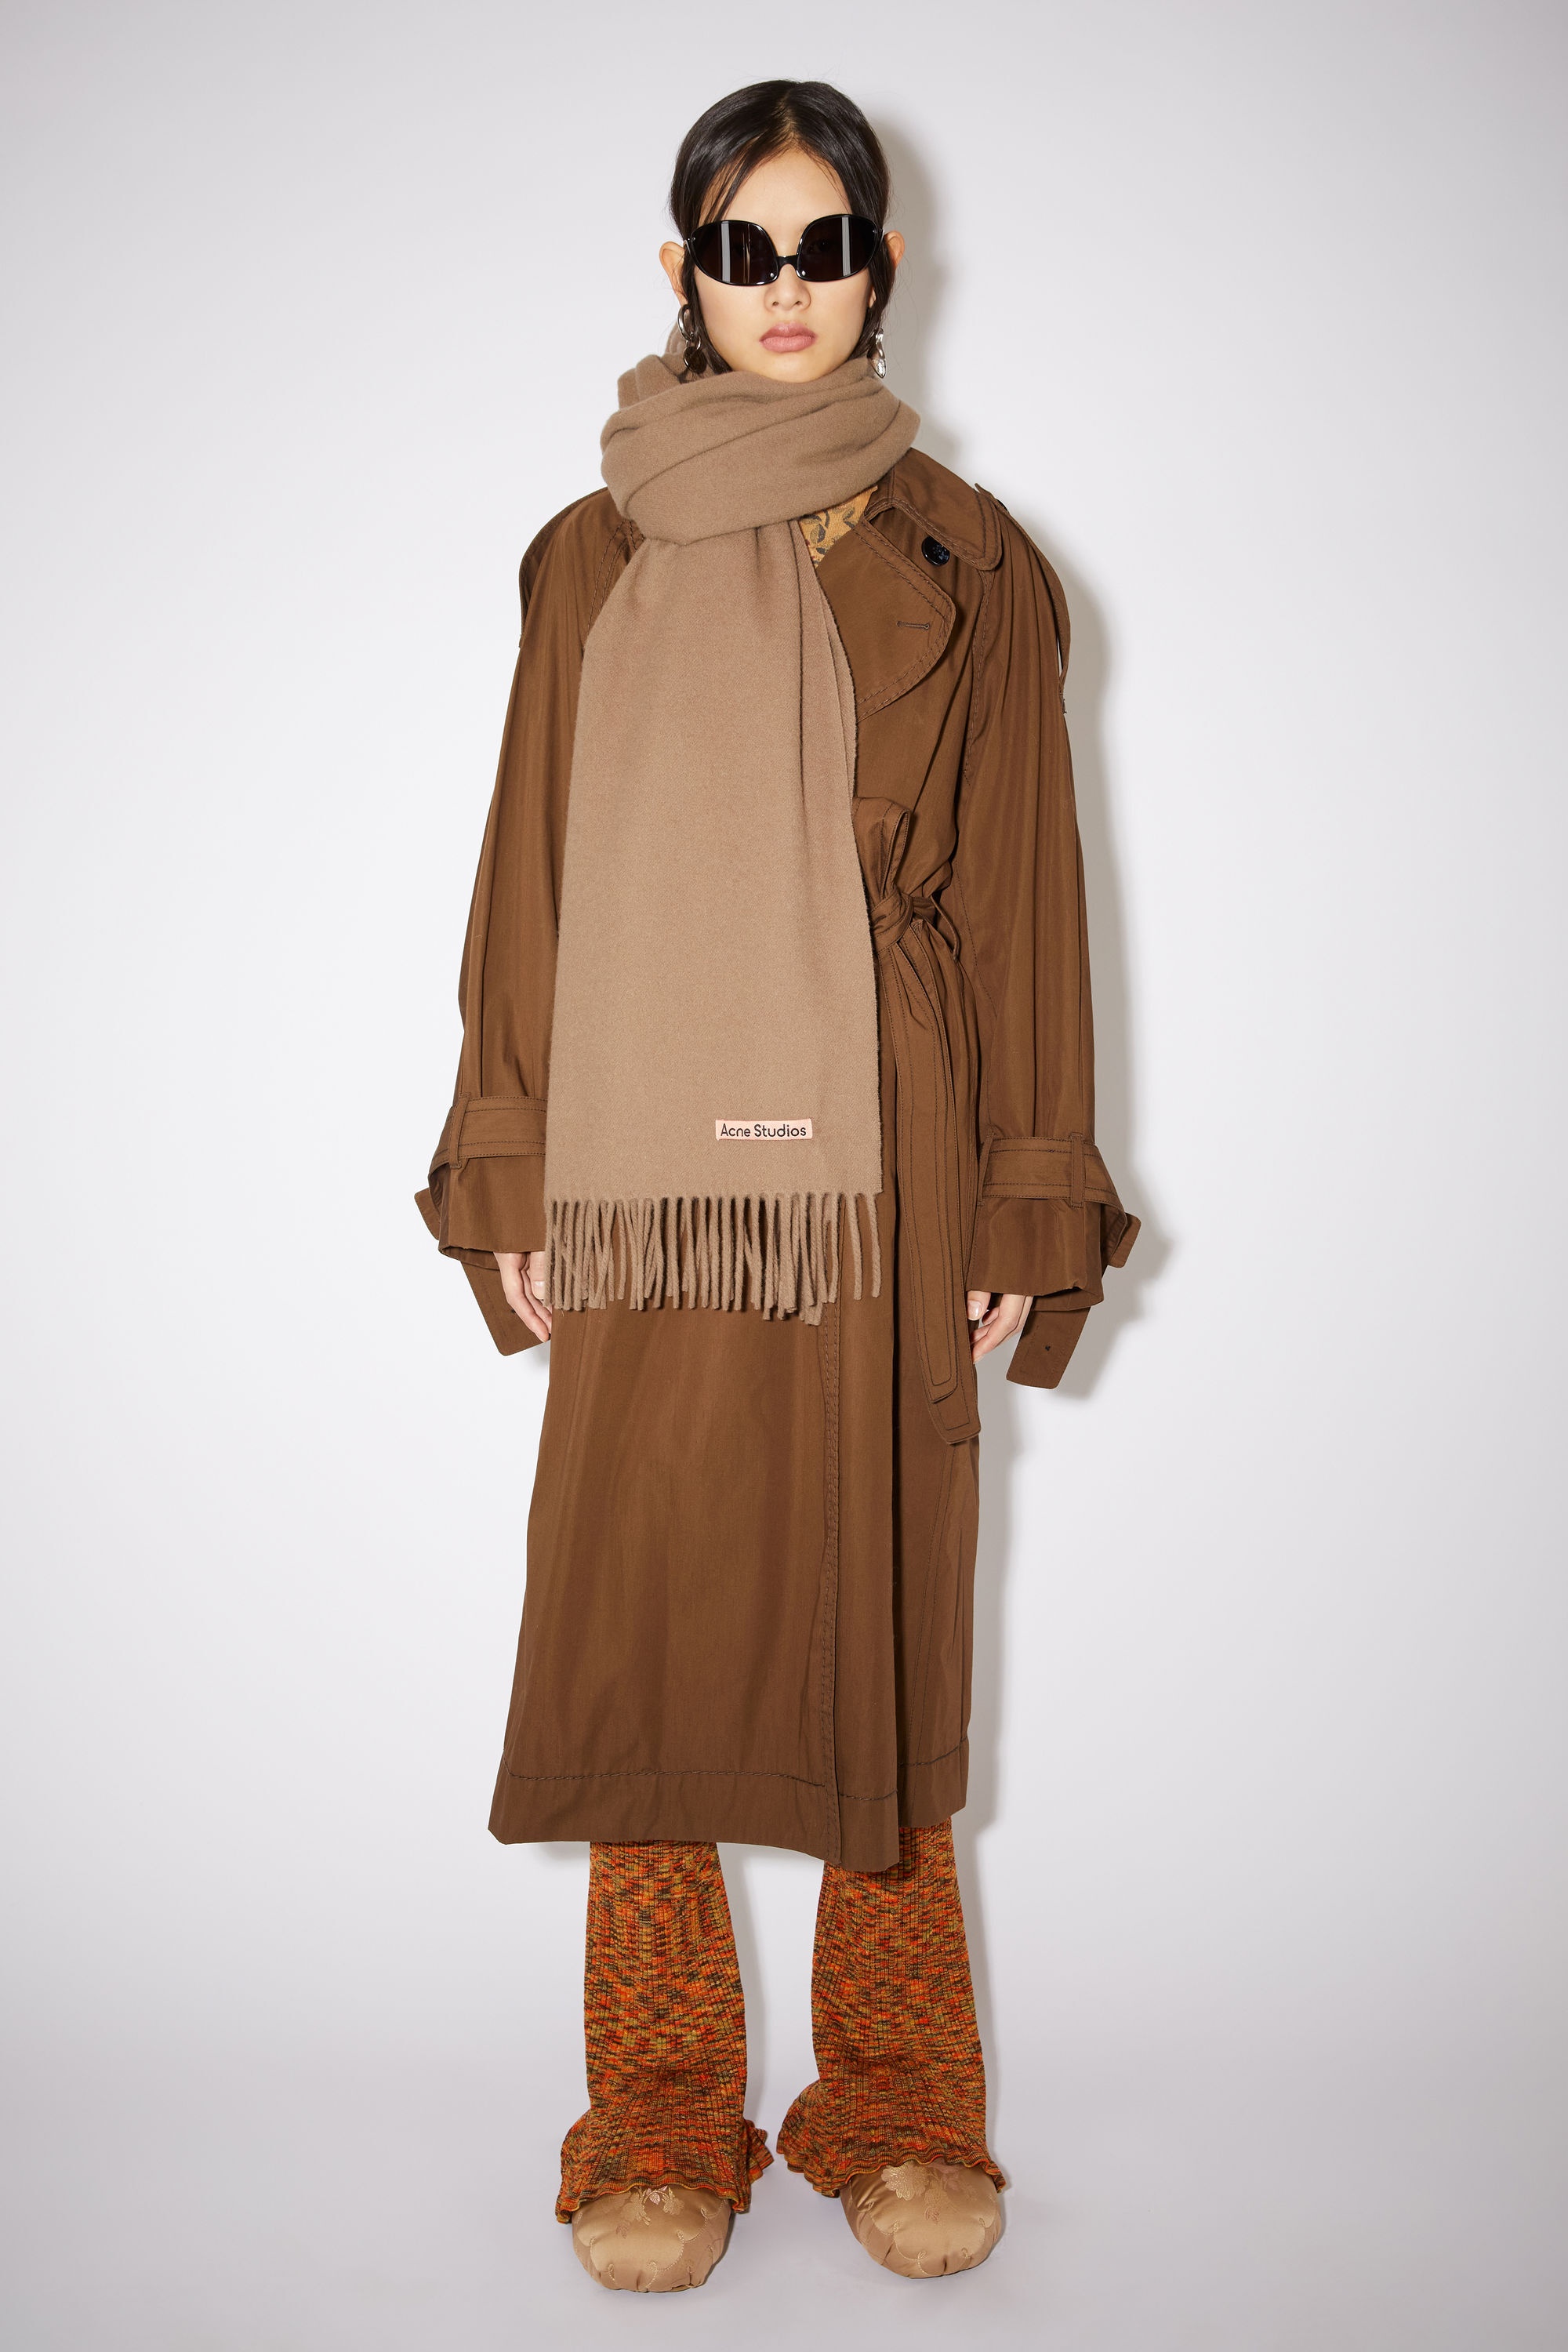 Fringe wool scarf - oversized - Caramel brown - 2